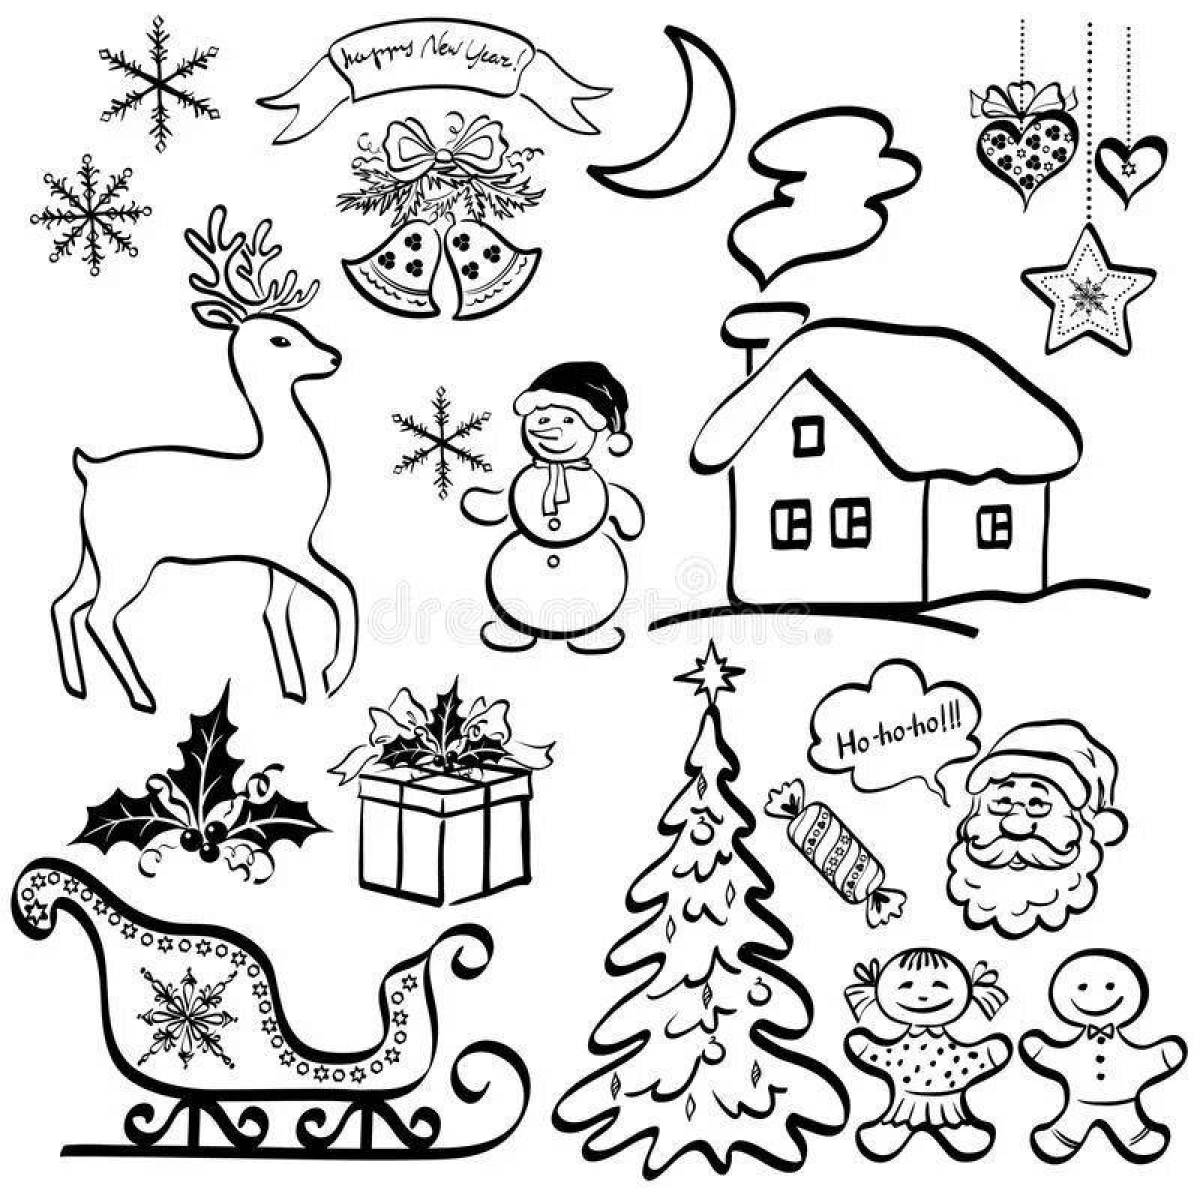 Gorgeous Christmas stickers